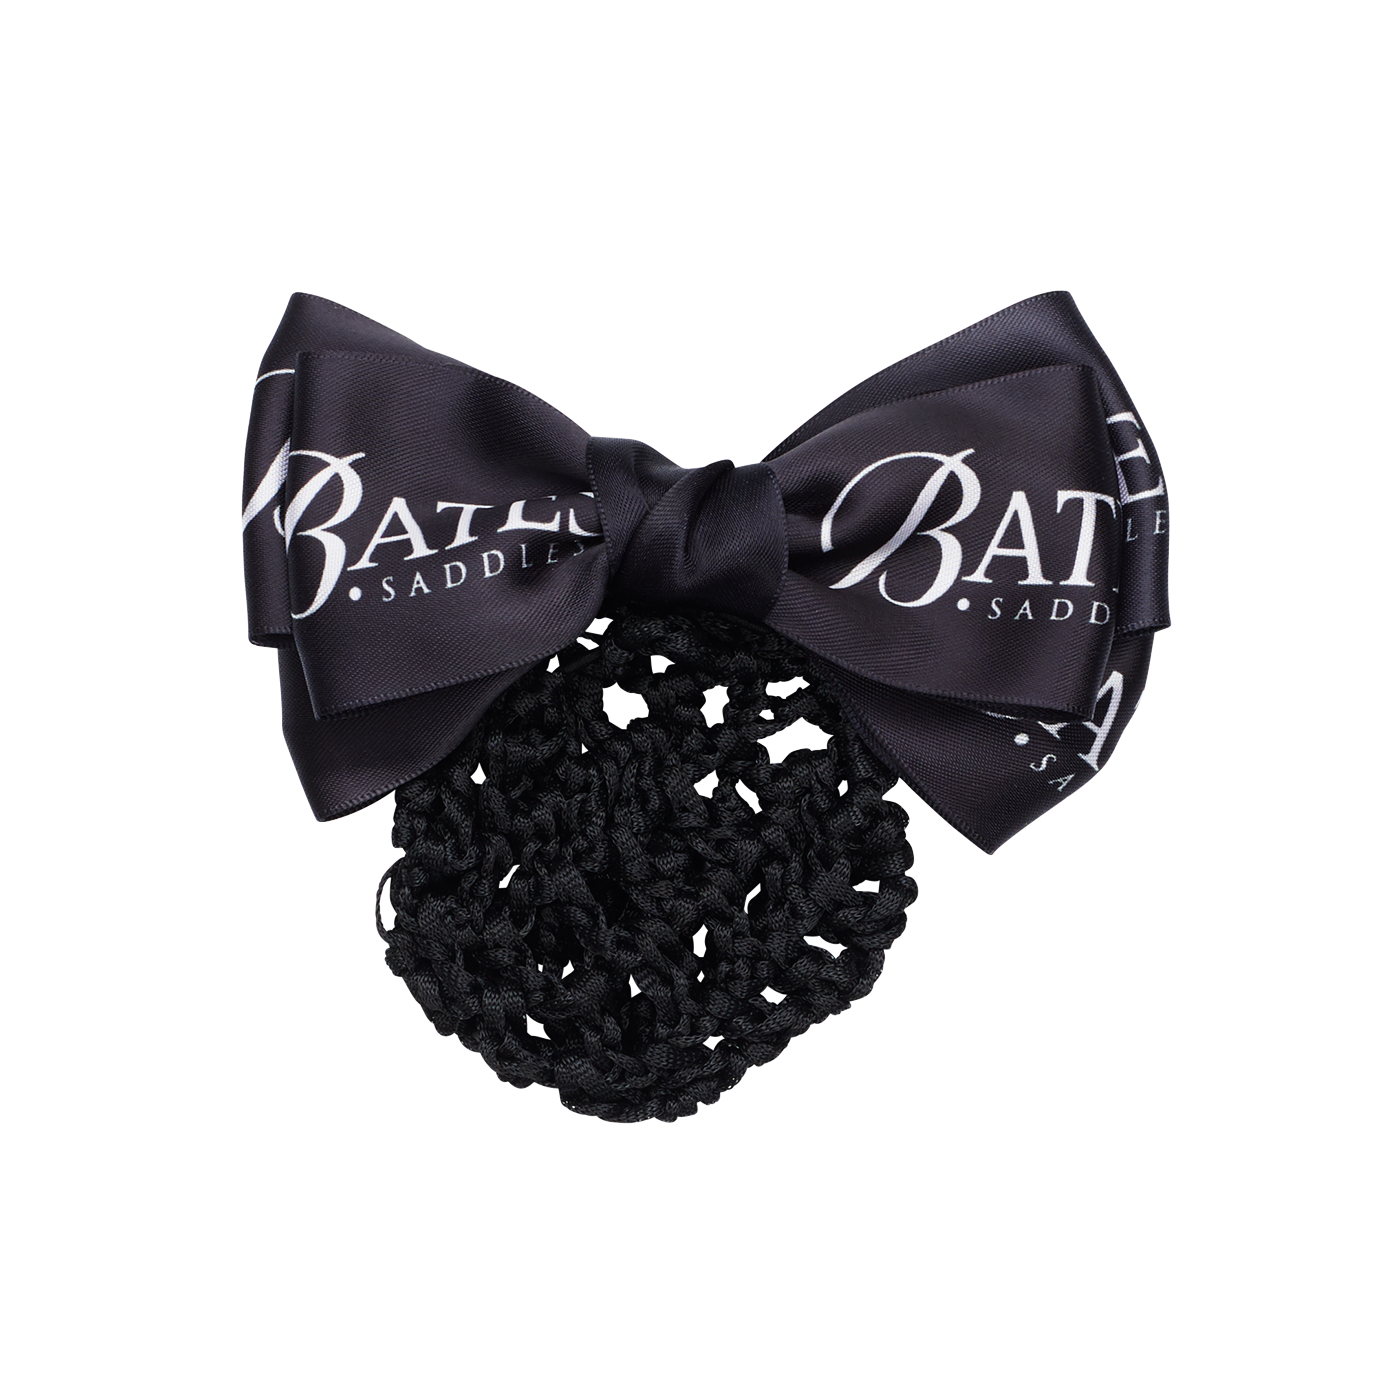 Bates Hair Net with Bow - 691:41110190031024